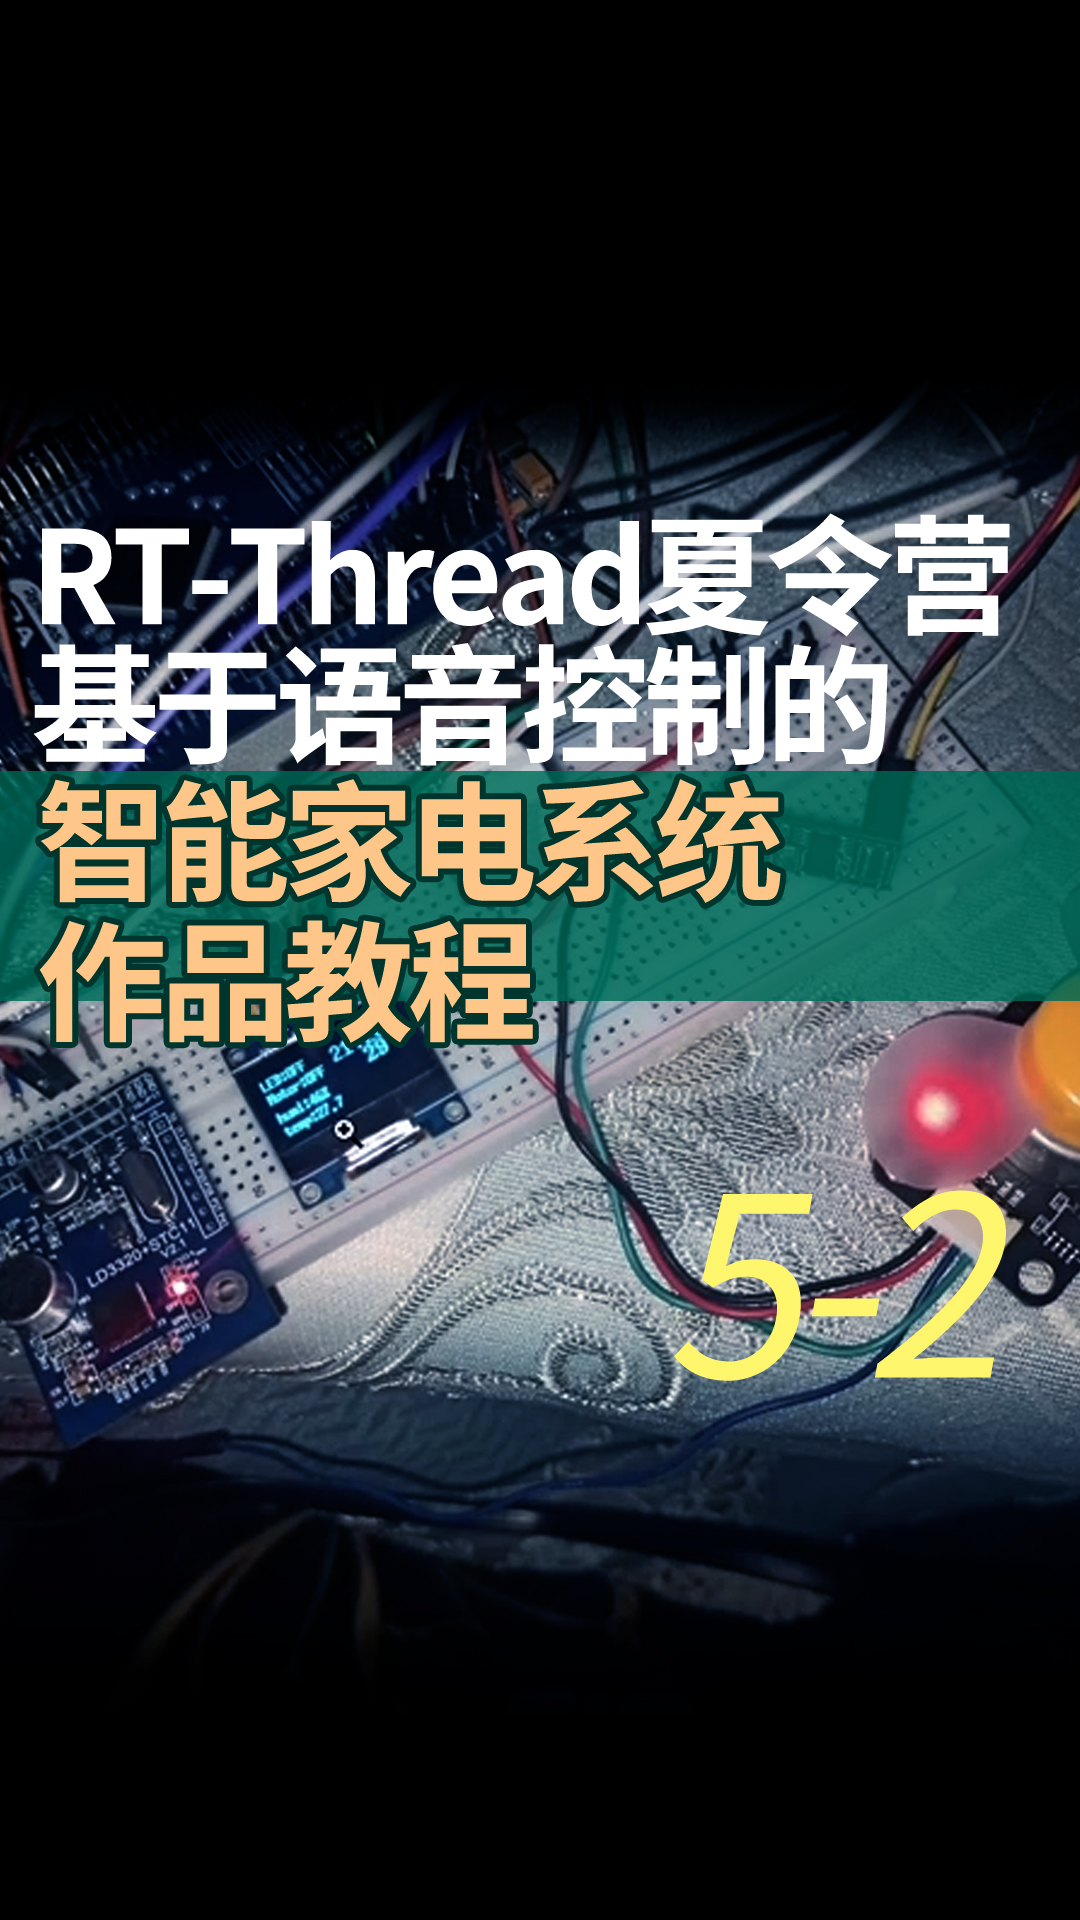 RT-Thread夏令營基于語音控制的智能家電系統作品教程 5-2uart實現單片機與單片機通信